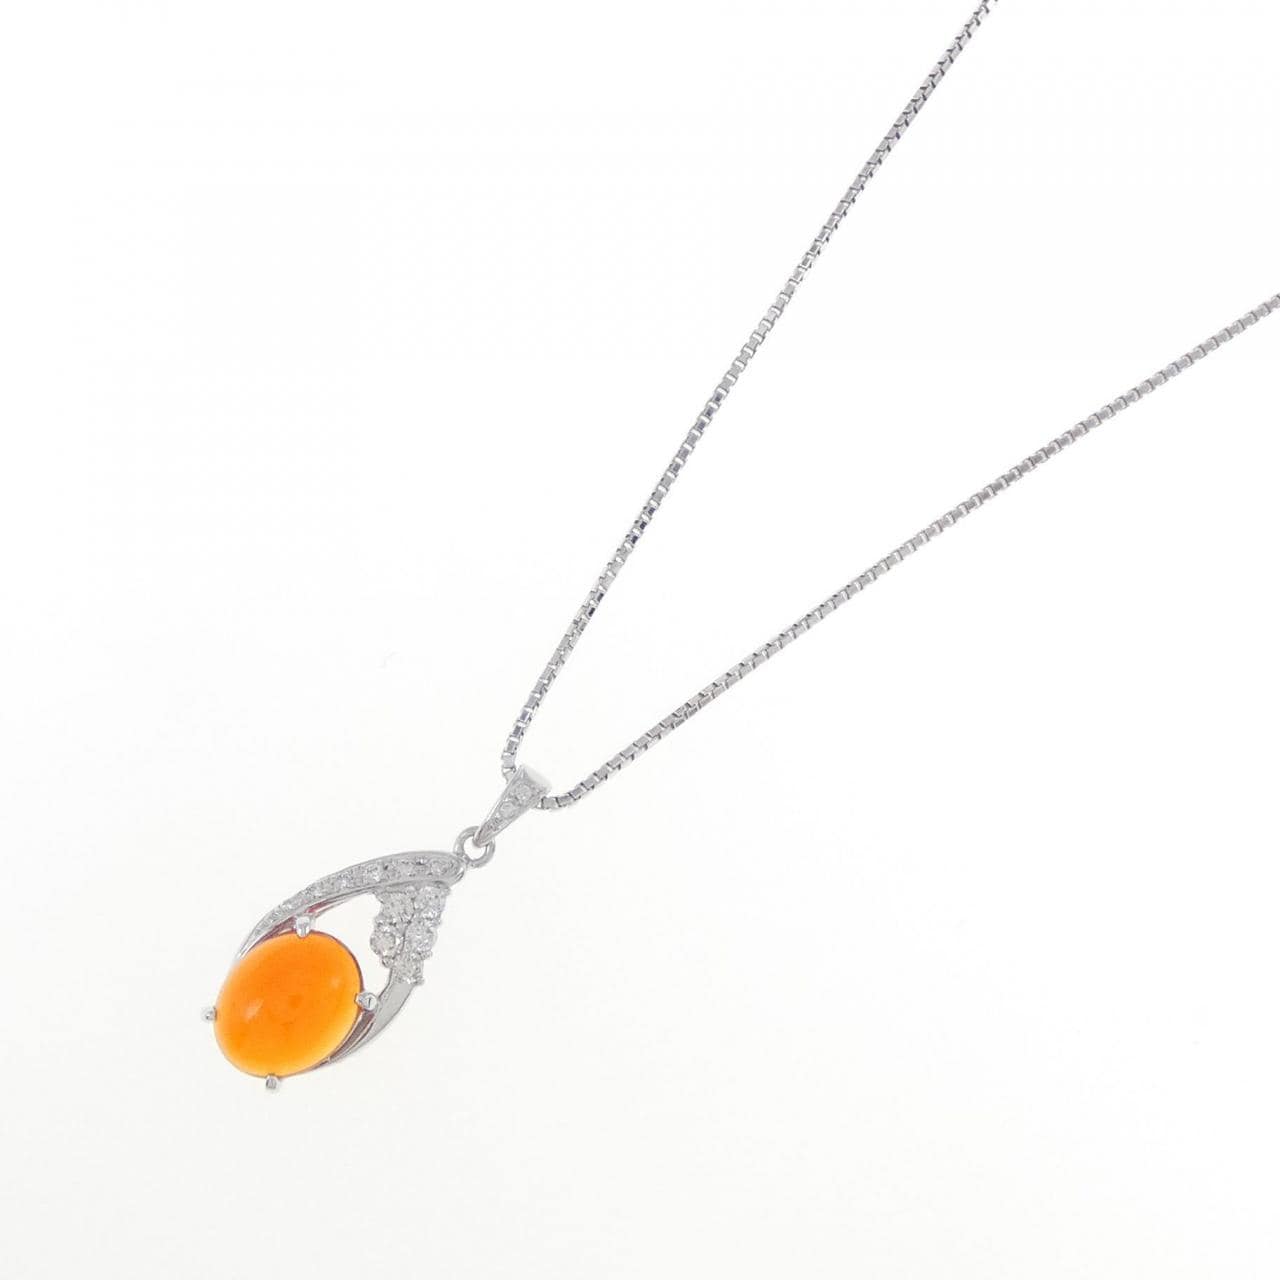 K18WG OPAL necklace 1.89CT